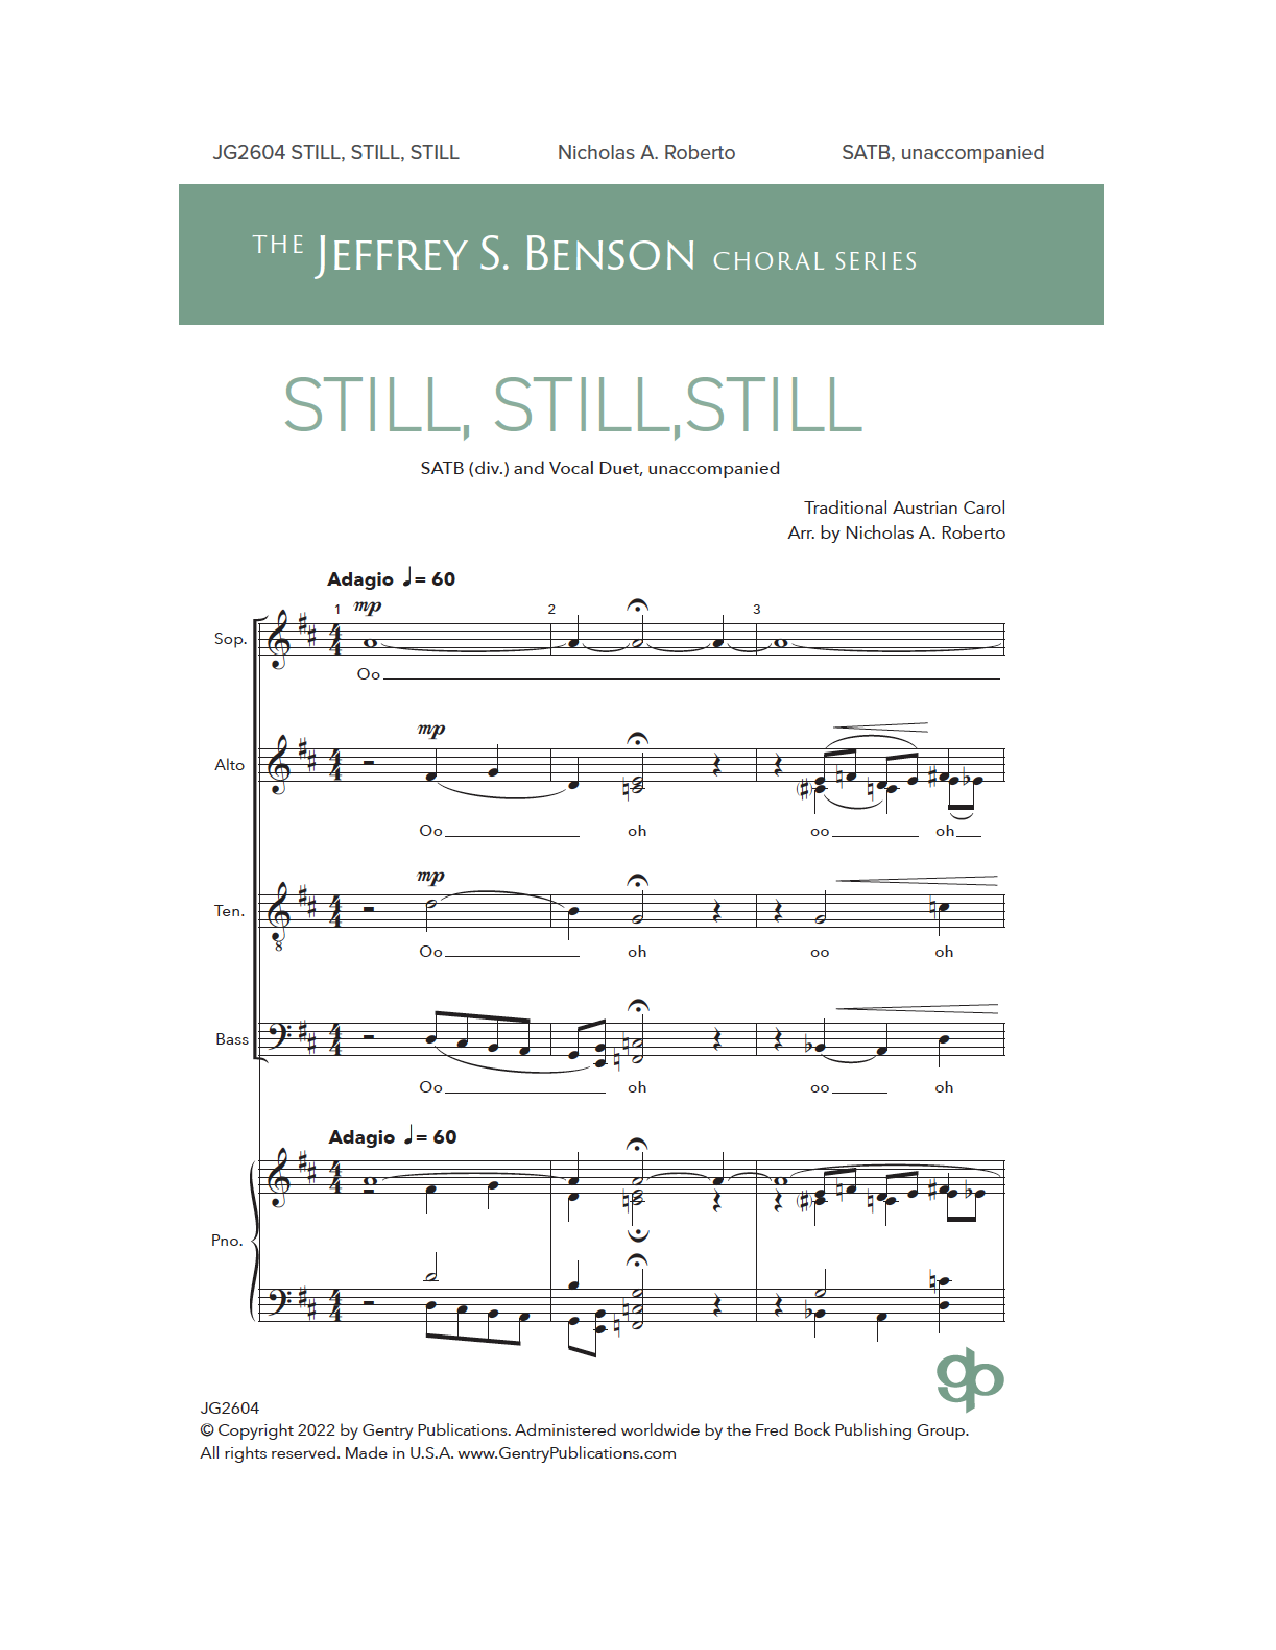 Nicholas A. Roberto Still, Still, Still Sheet Music Notes & Chords for SATB Choir - Download or Print PDF